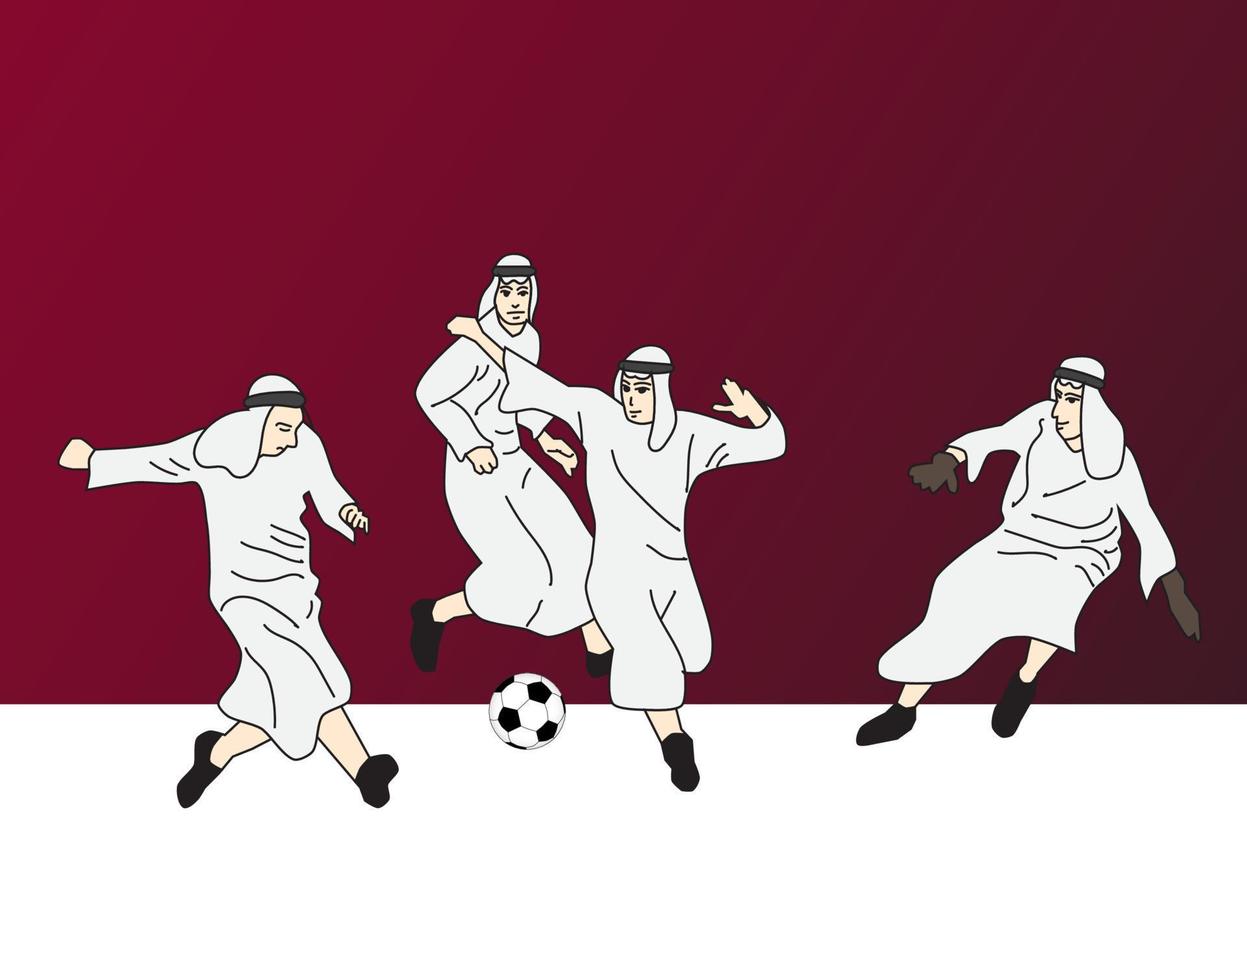 qatar fútbol 2022 ilustración vector